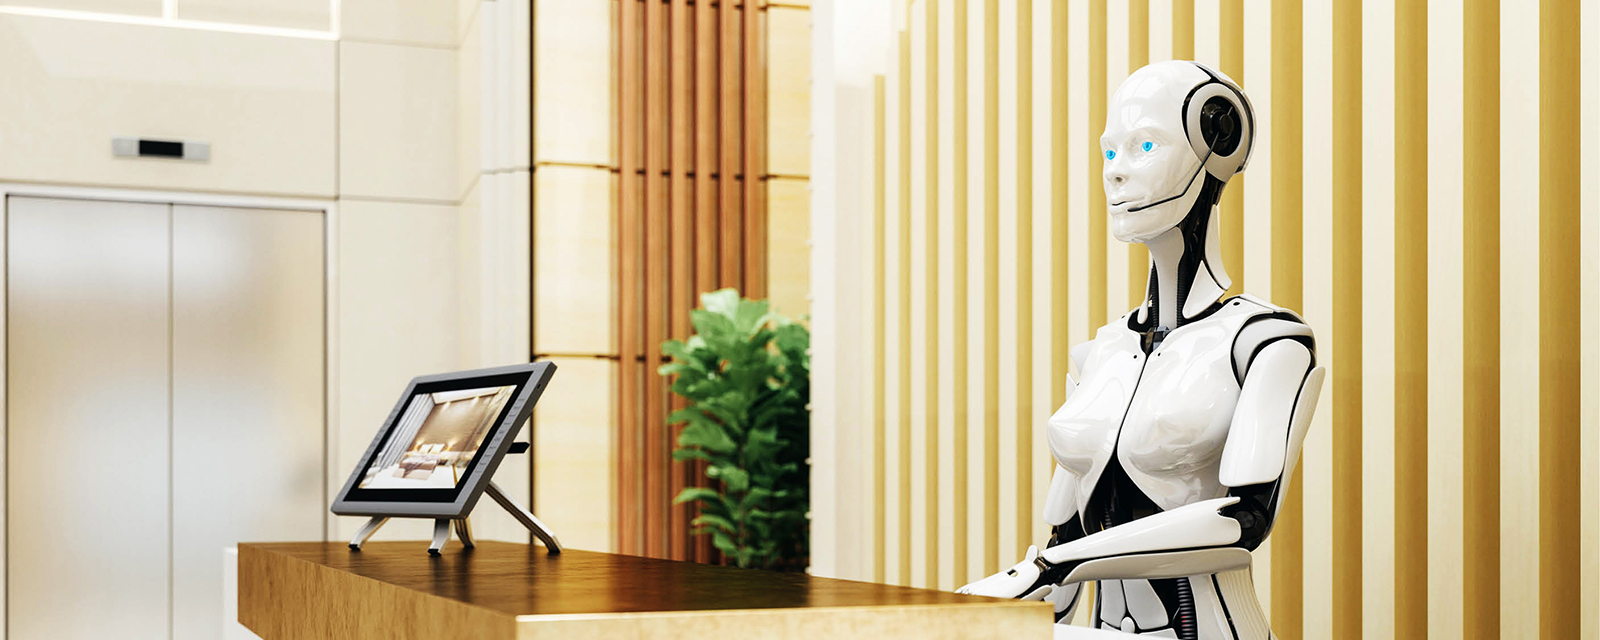 Robot greeter at hotel front desk